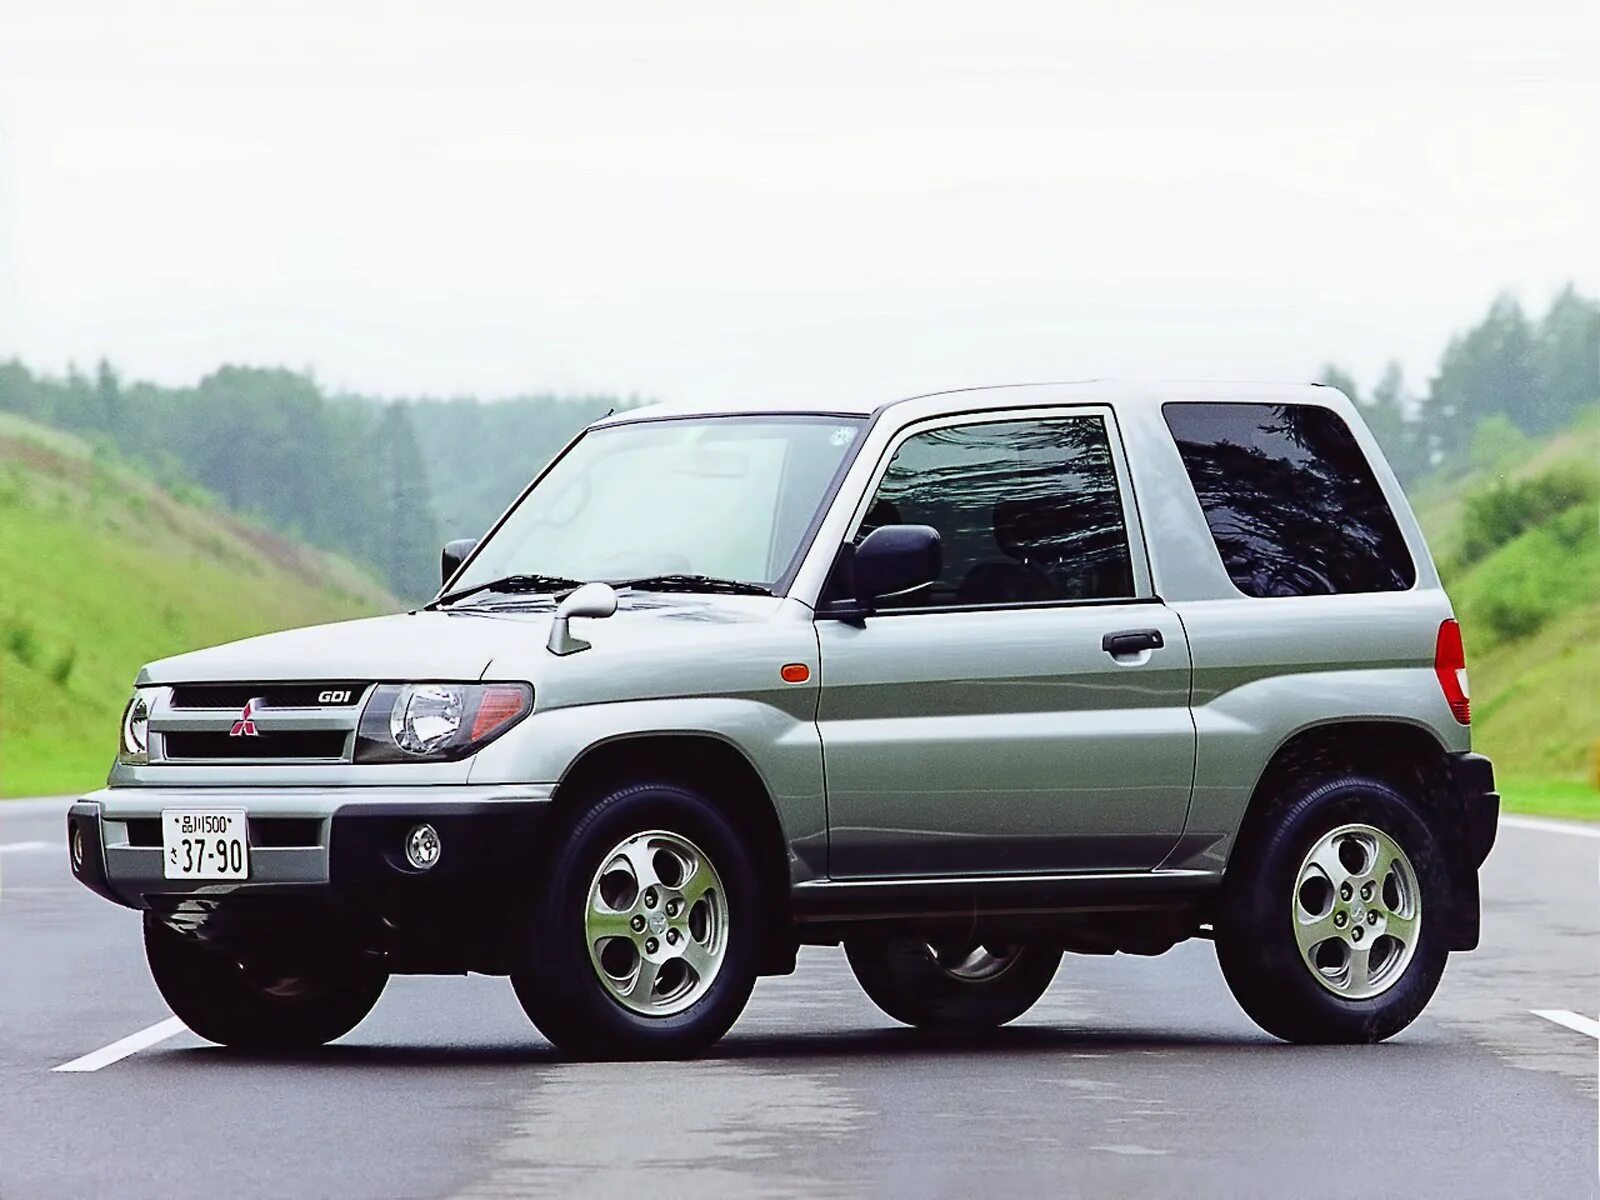 Mitsubishi трехдверная. Mitsubishi Pajero io. Mitsubishi Pajero io 1998. Mitsubishi Pajero io 1.8. Митсубиси Паджеро io 2000.